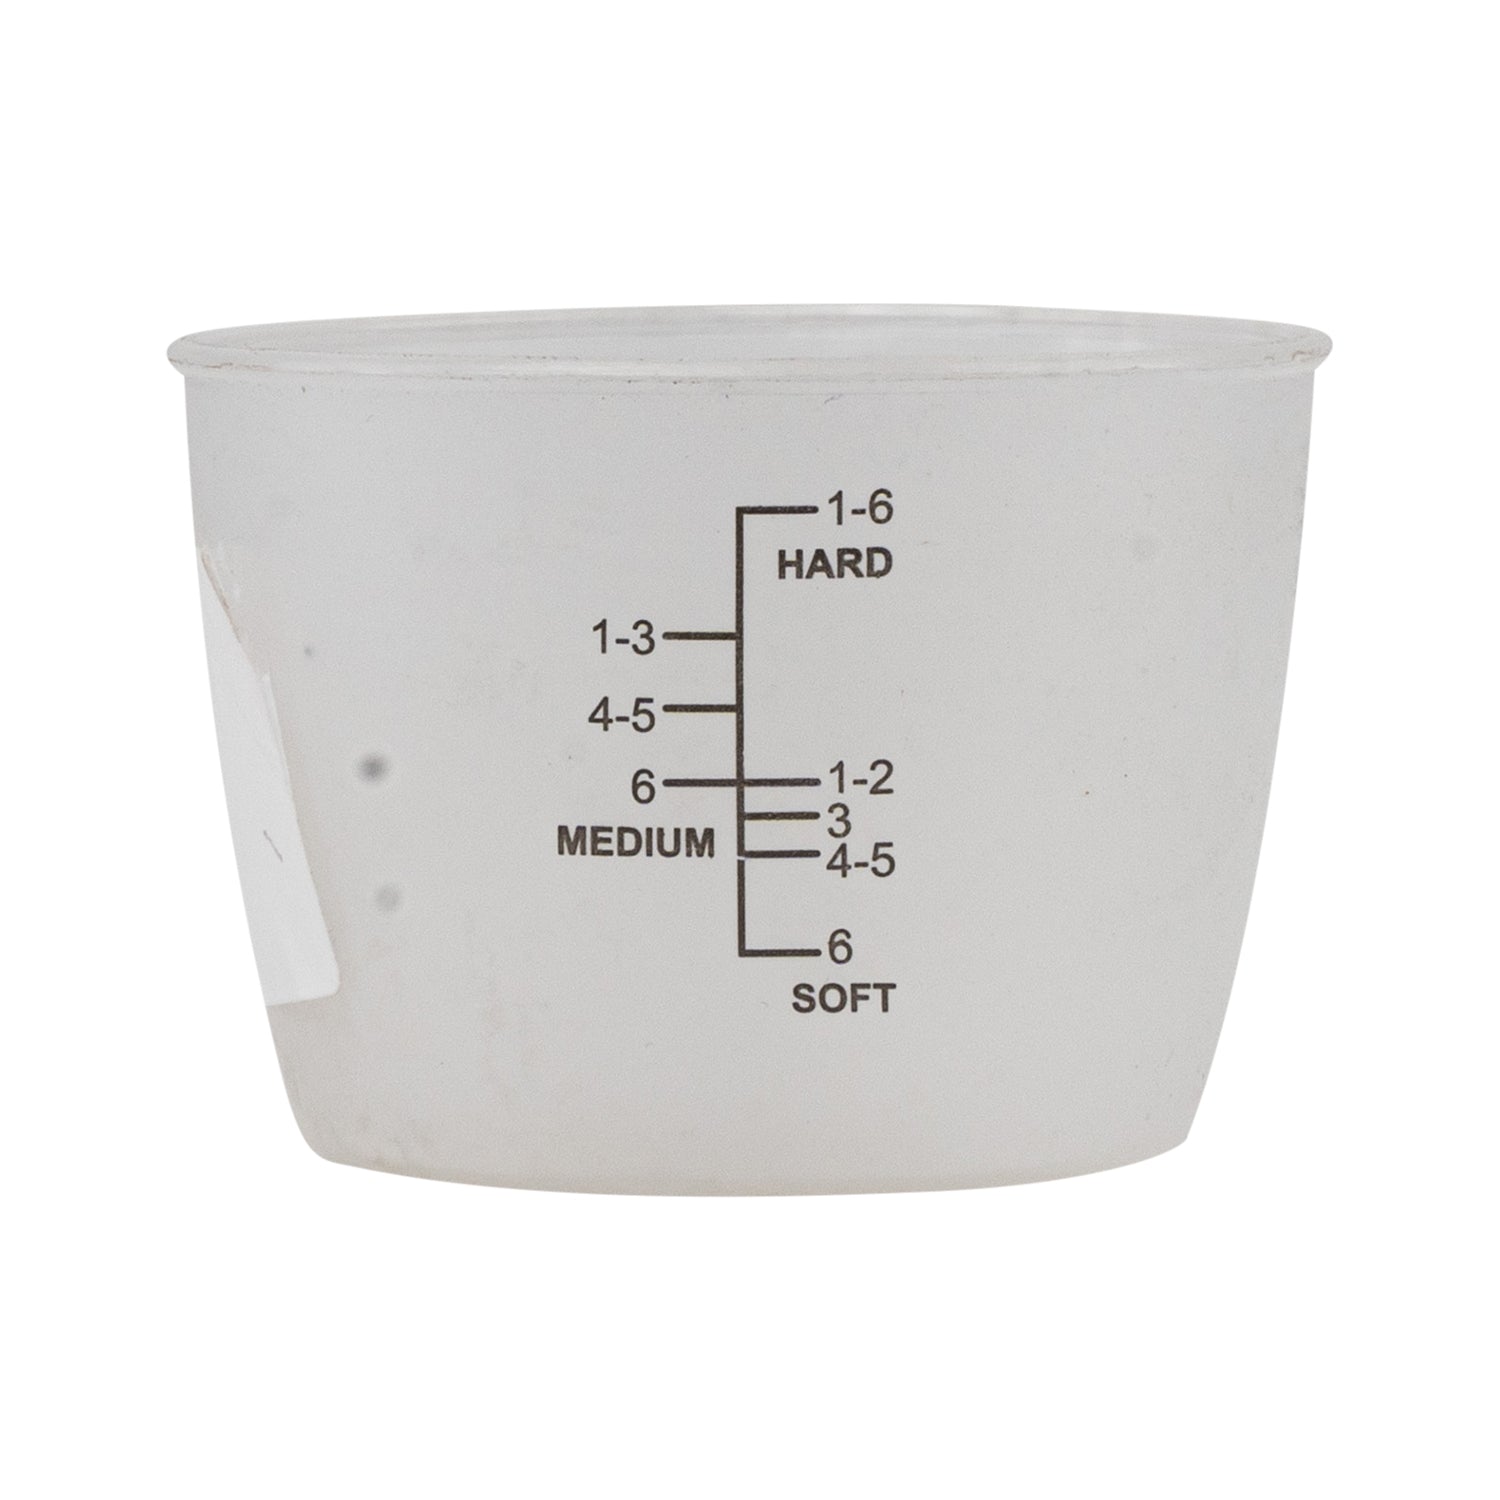 J-JATI Egg Boiler with measuring cup, 7 cup capacity - 12/CASE – JJati